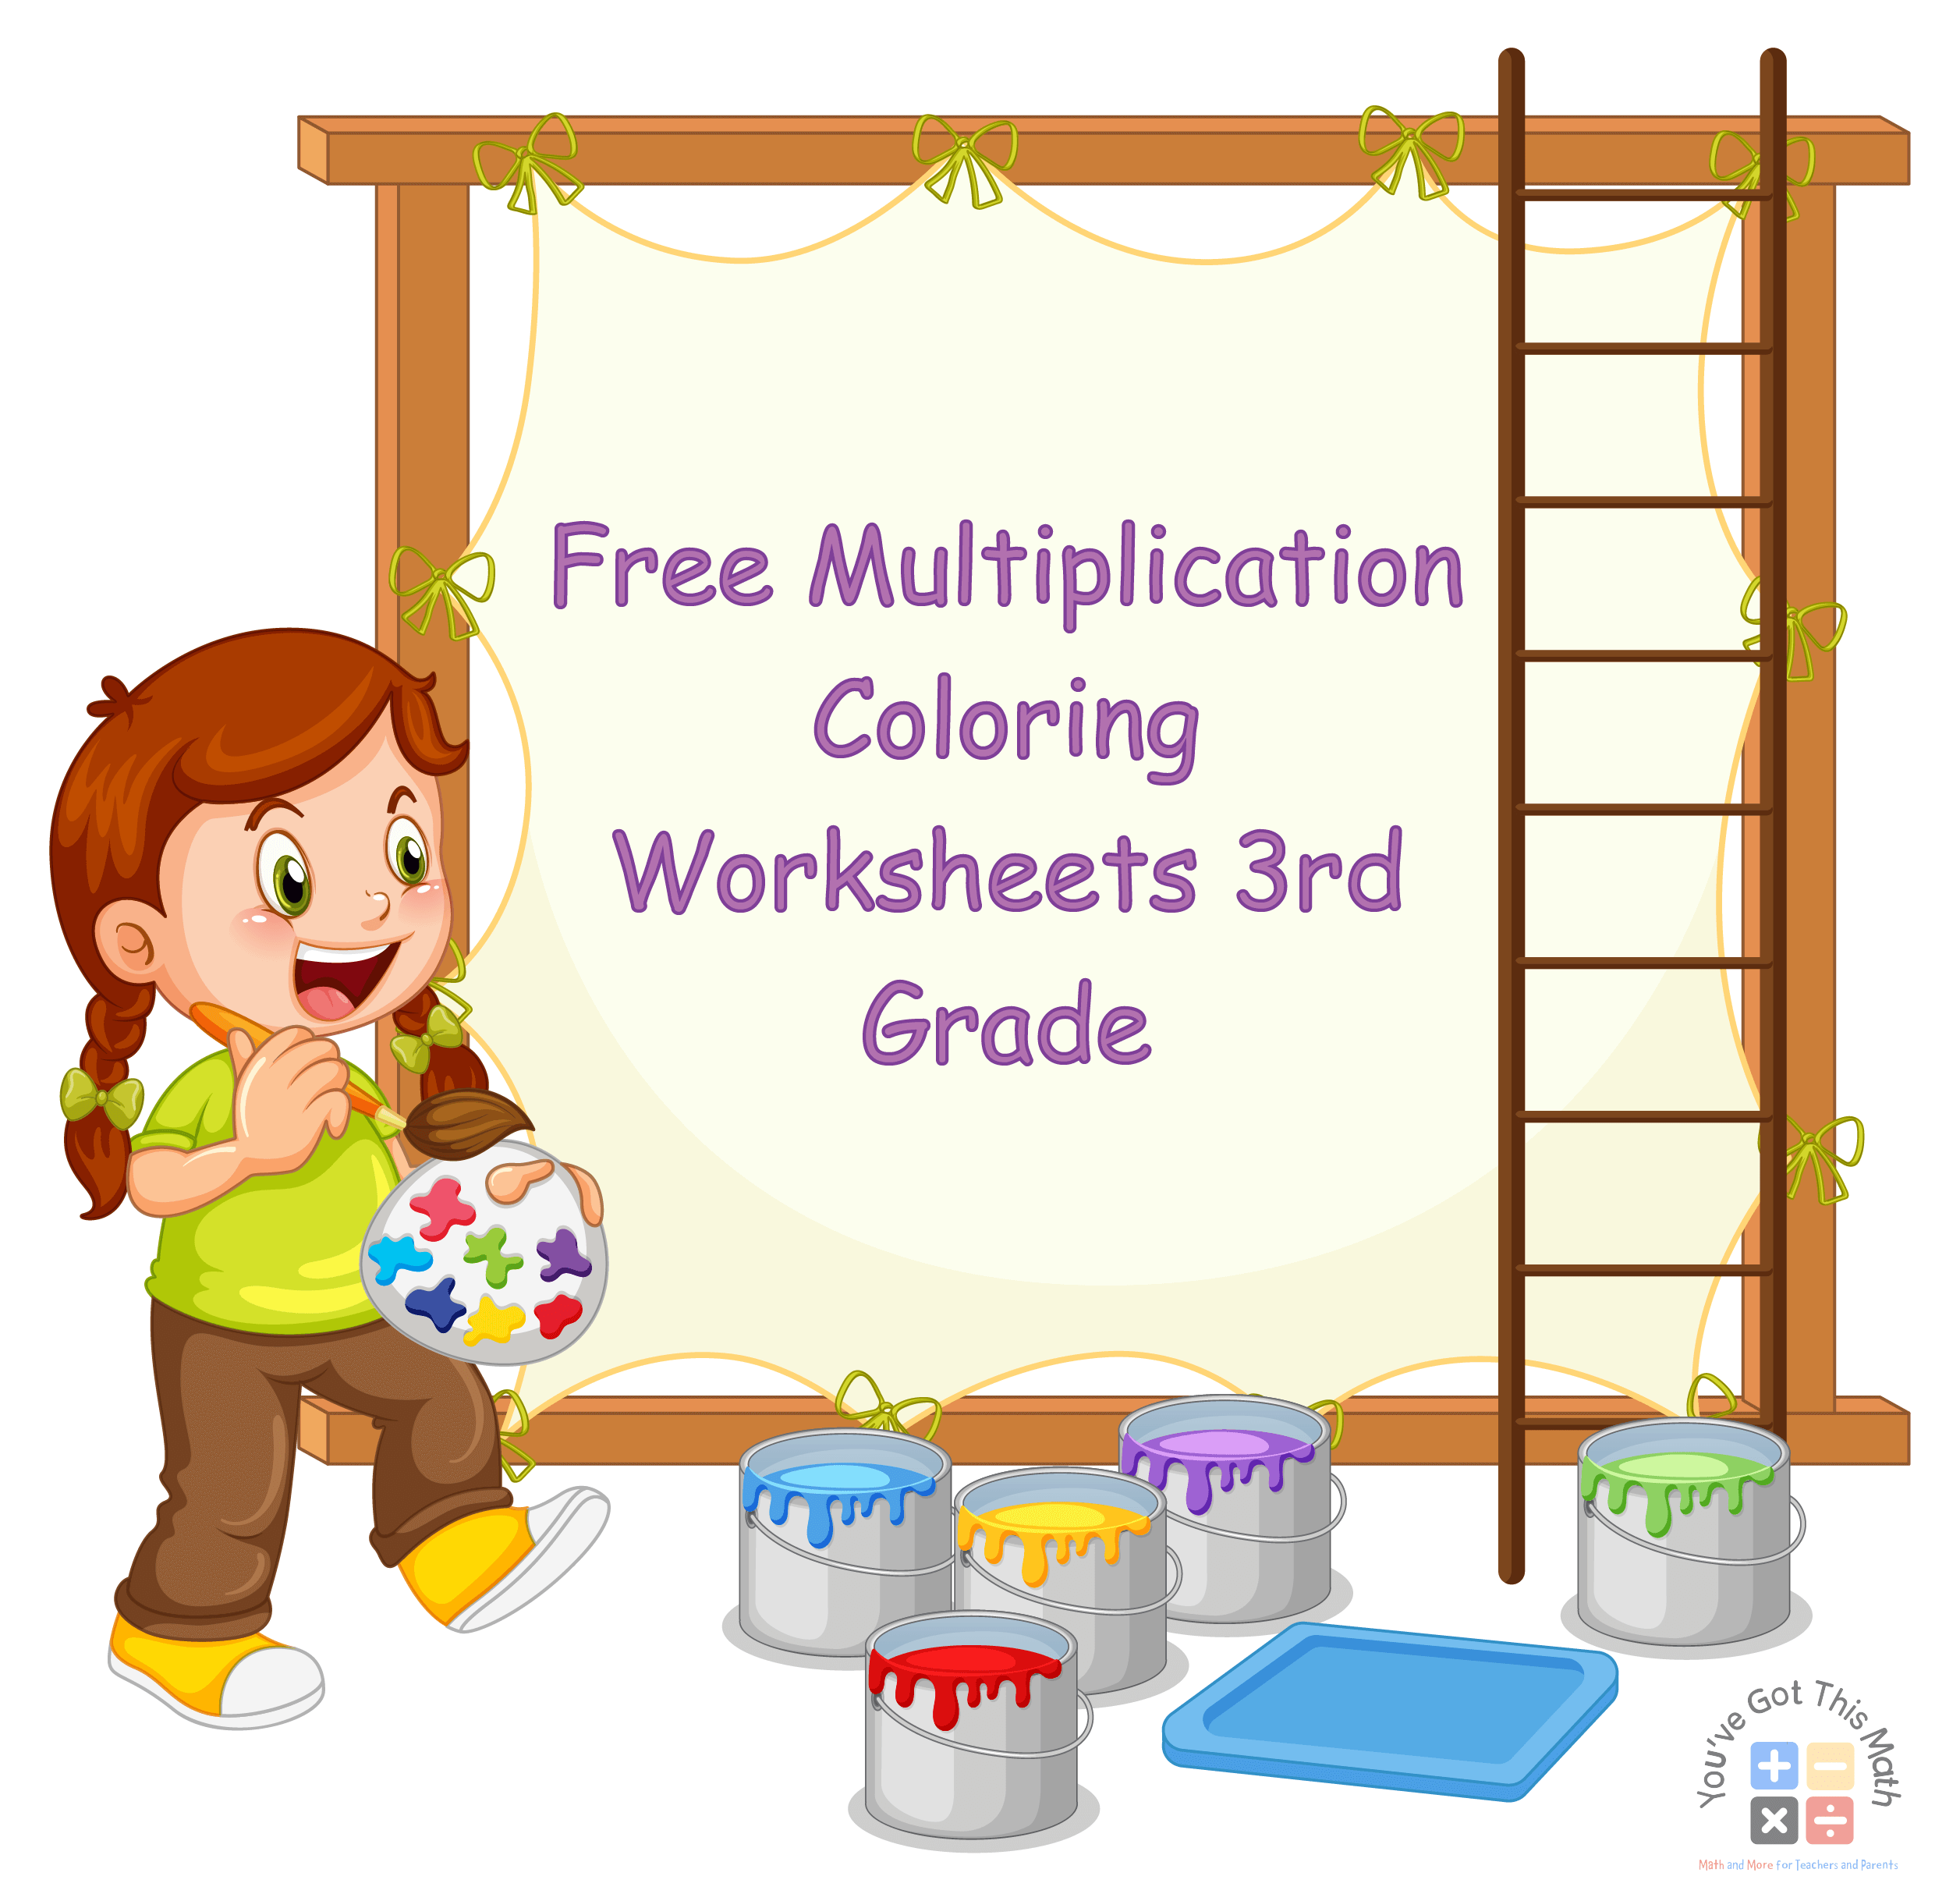 10 Free Multiplication Coloring Worksheets 3rd Grade